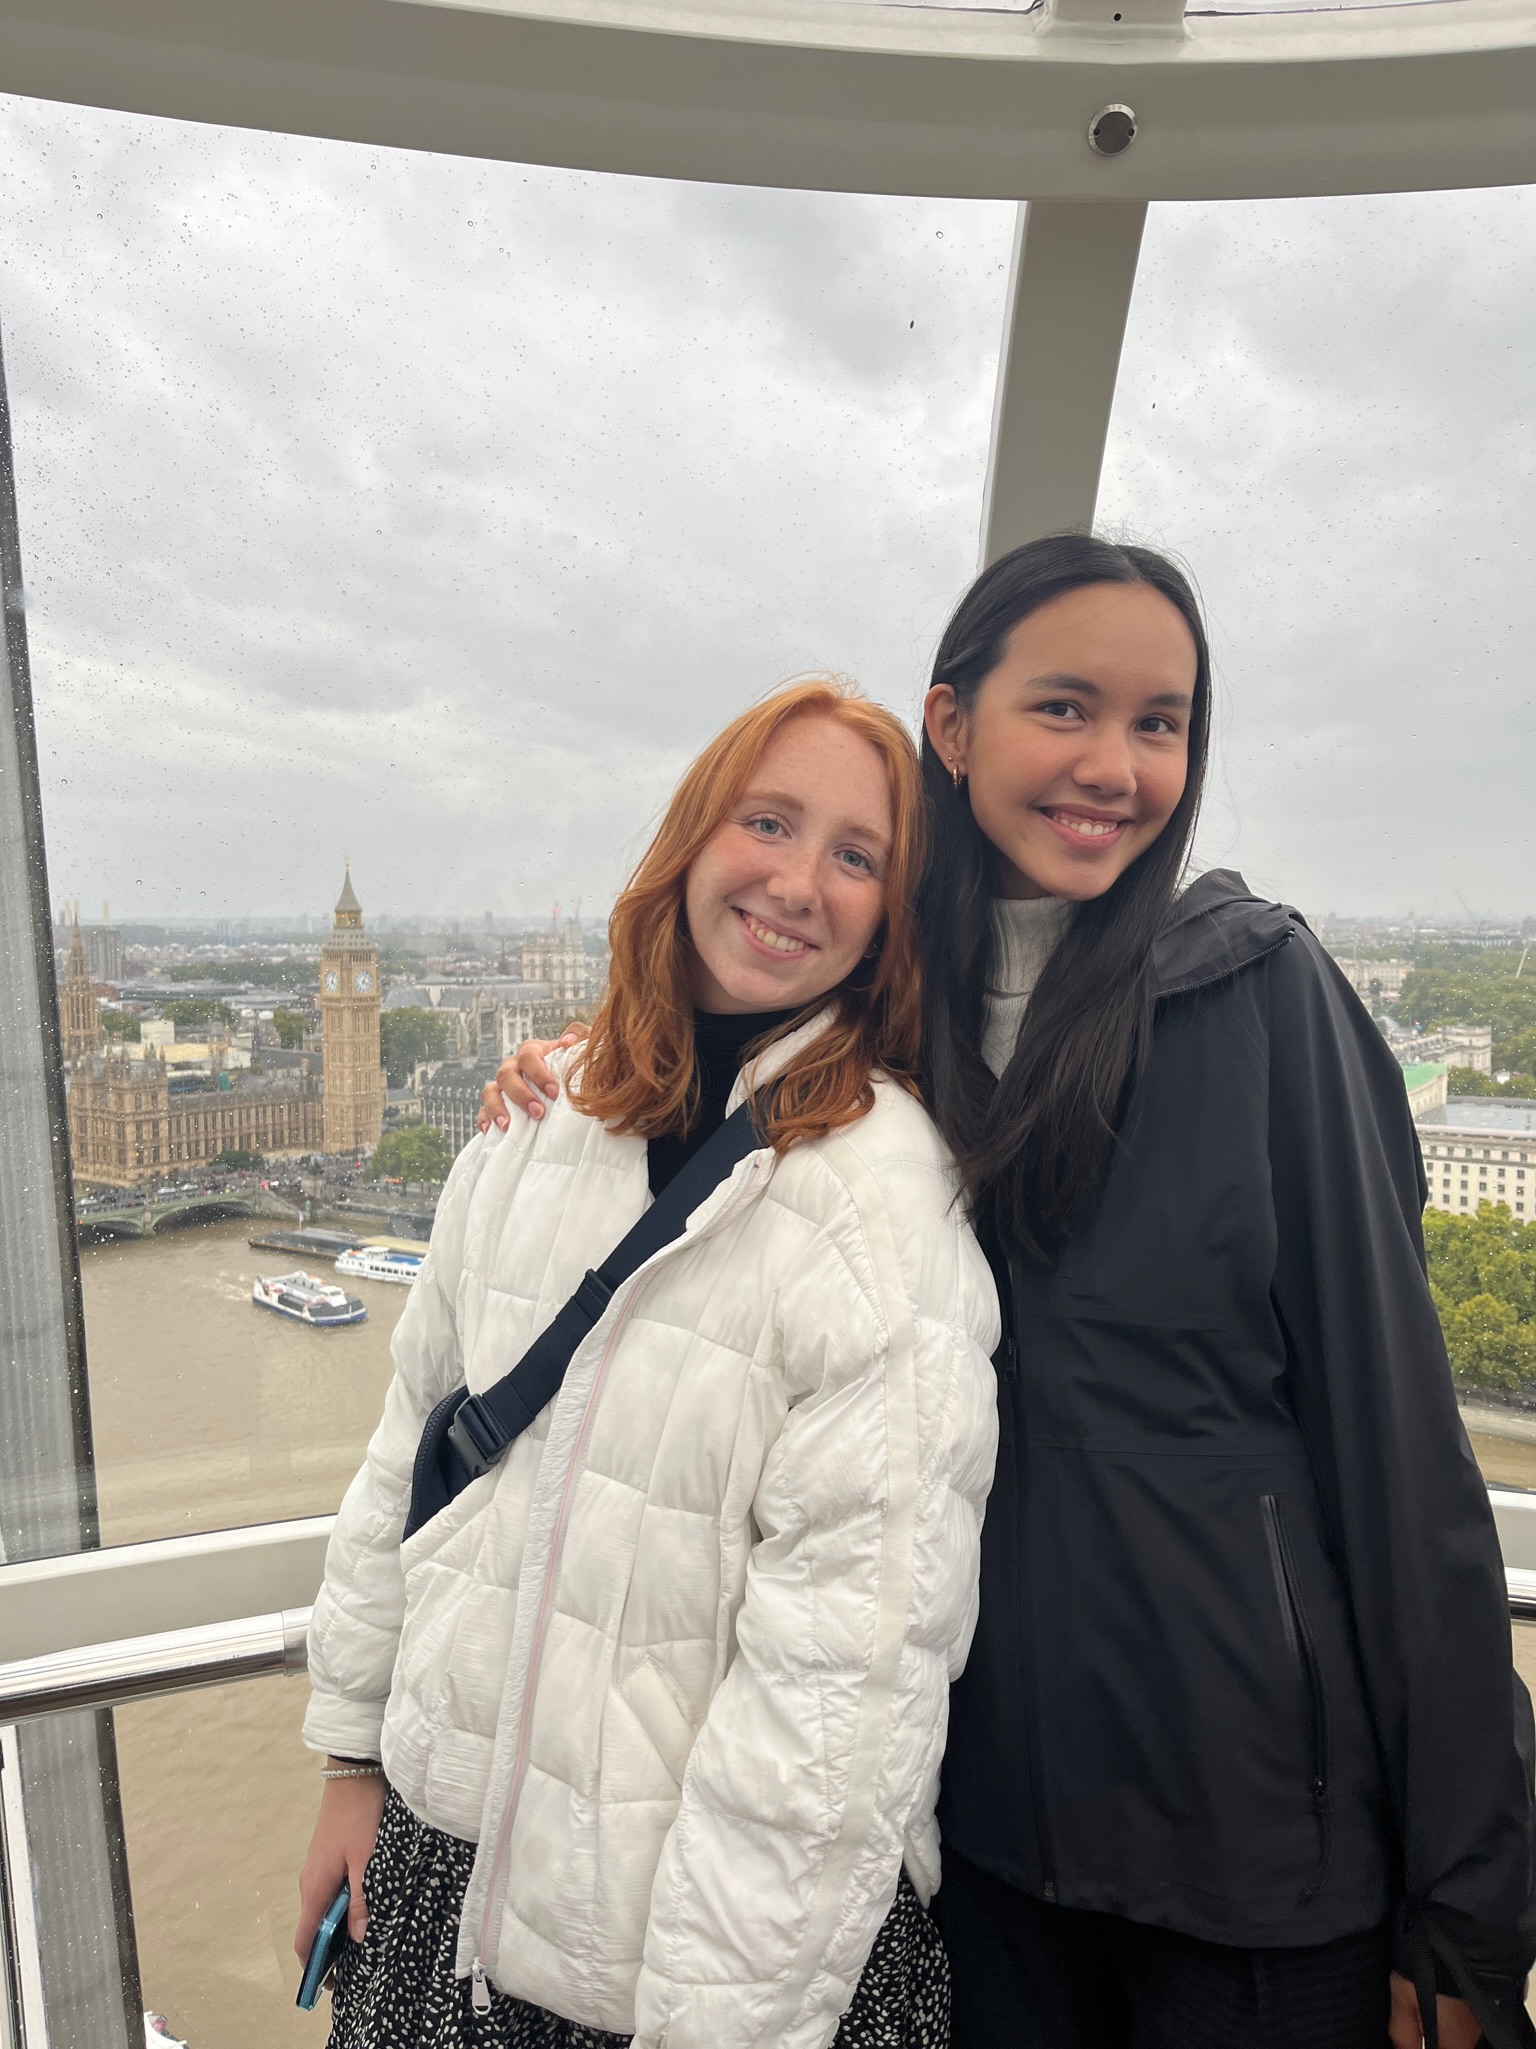 My flatmate and I on the London Eye!